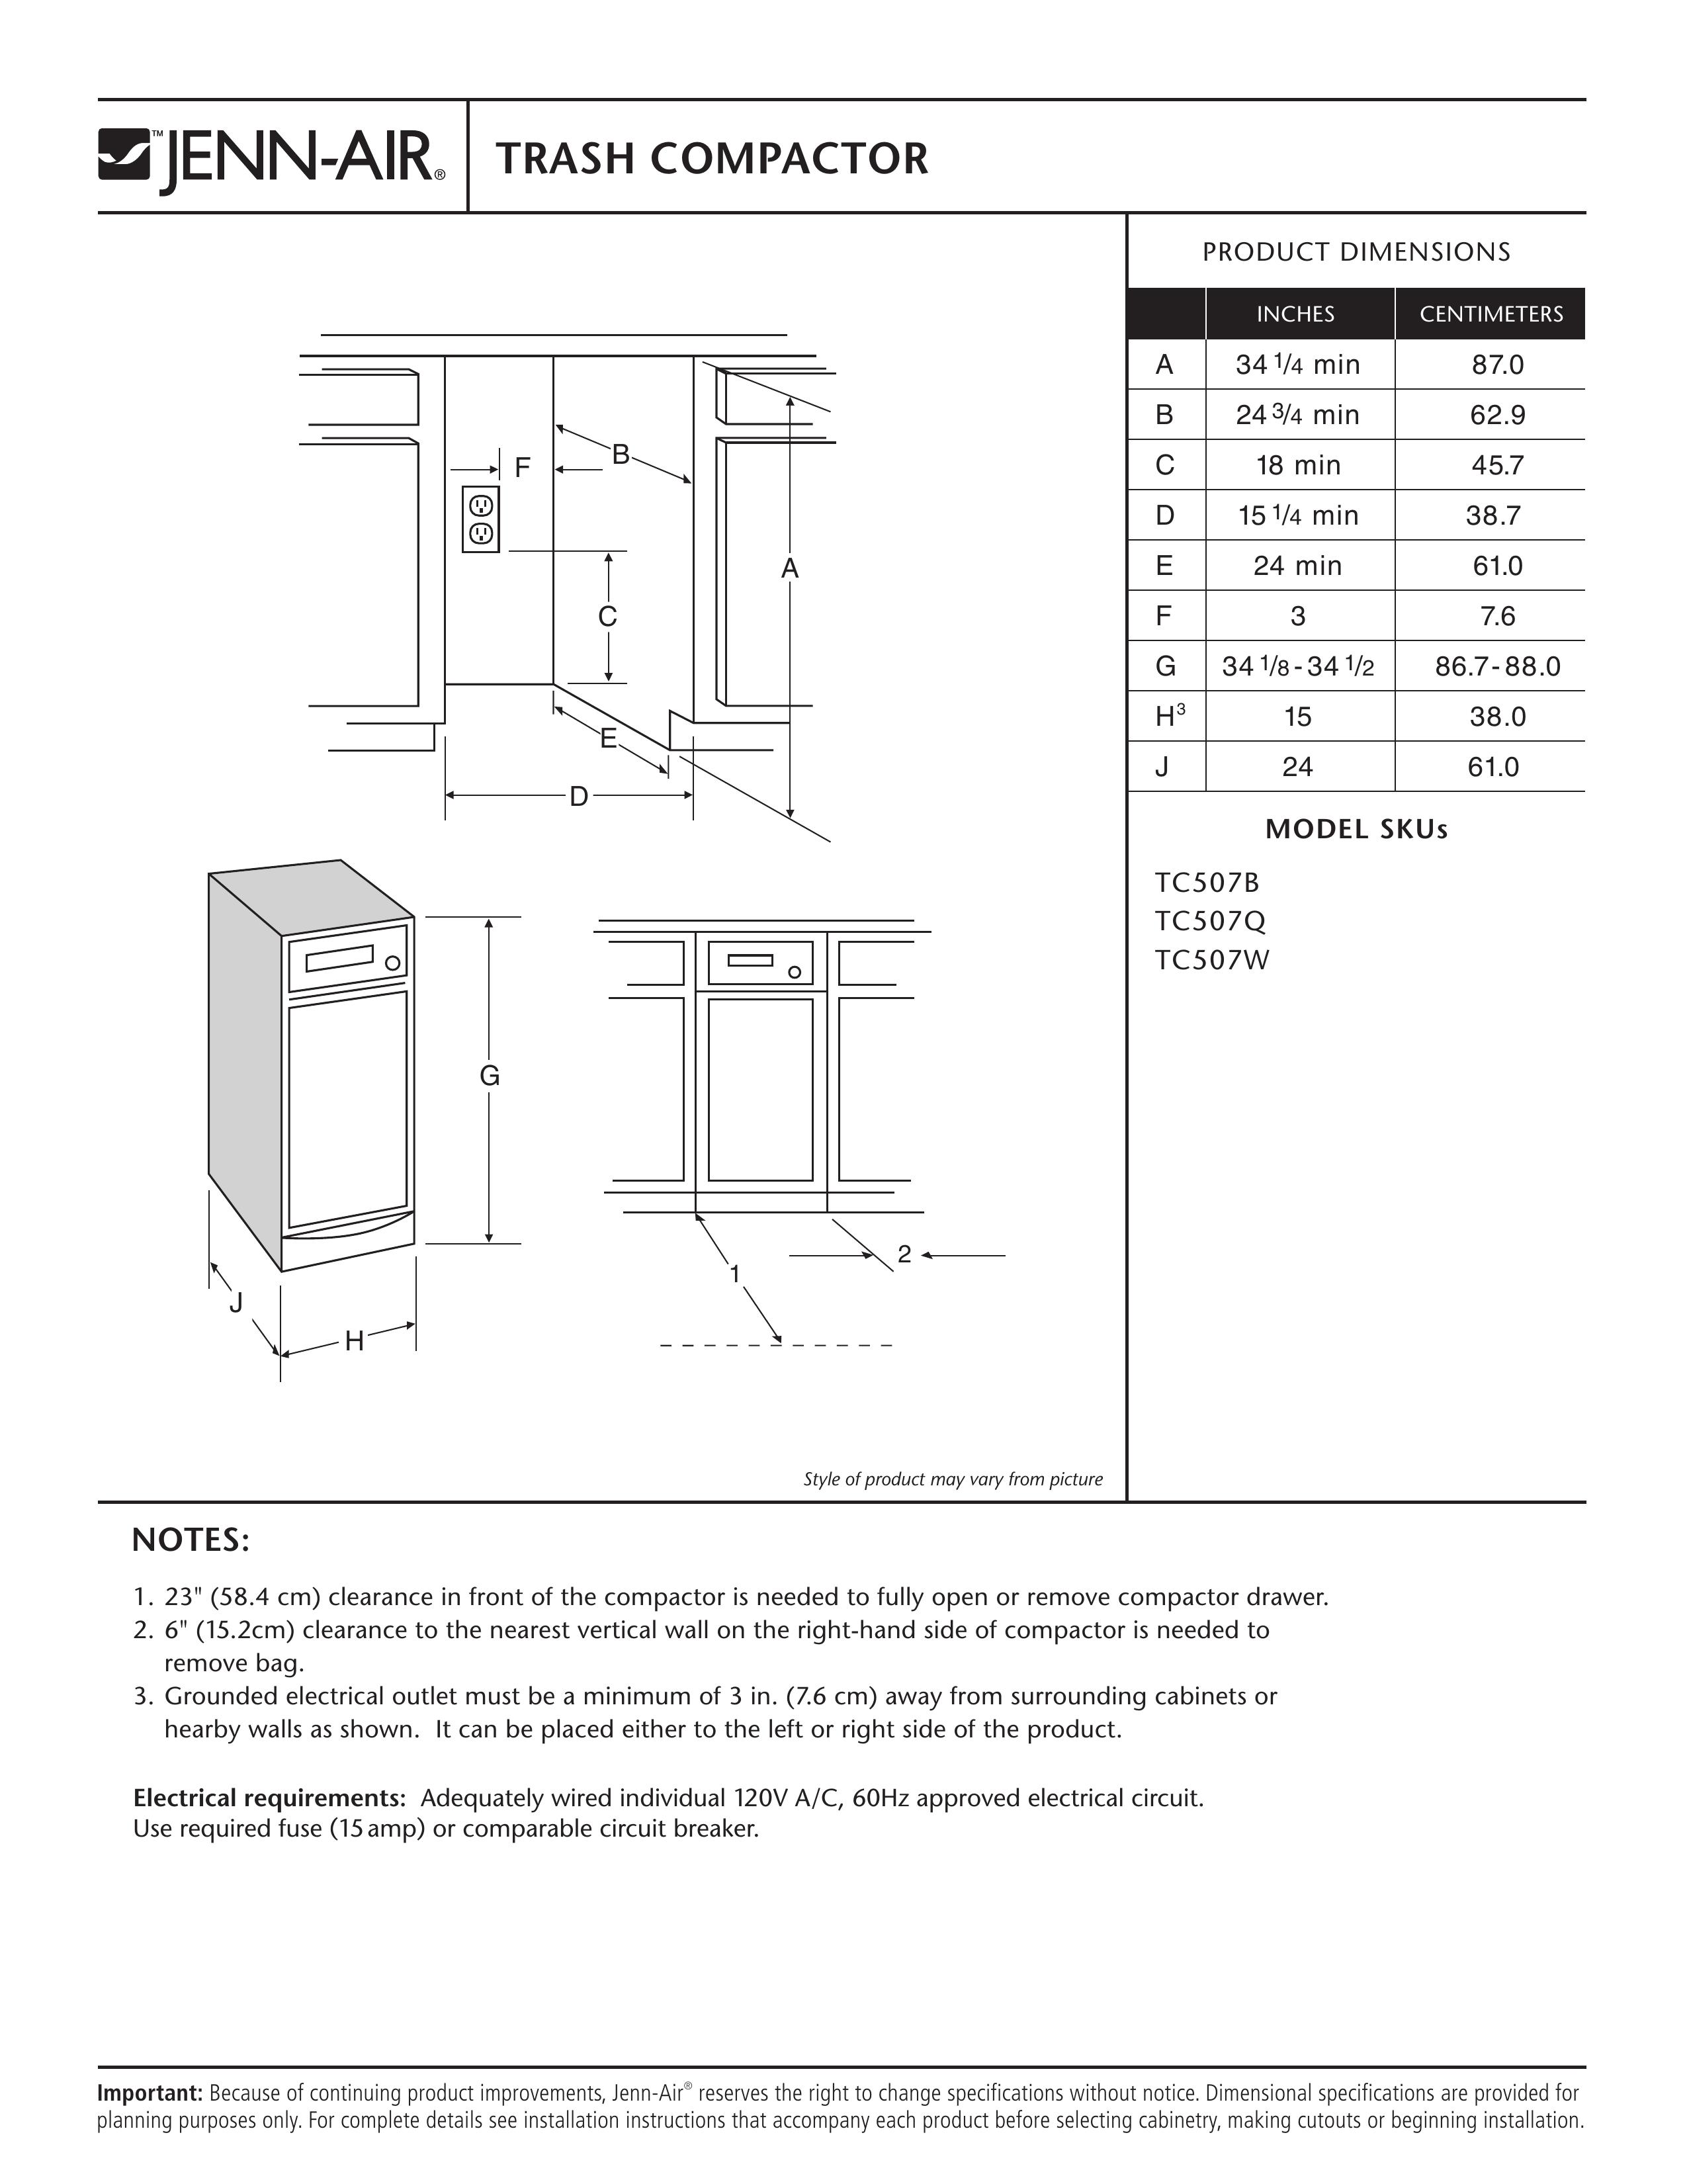 Jenn-Air TC507W Trash Compactor User Manual